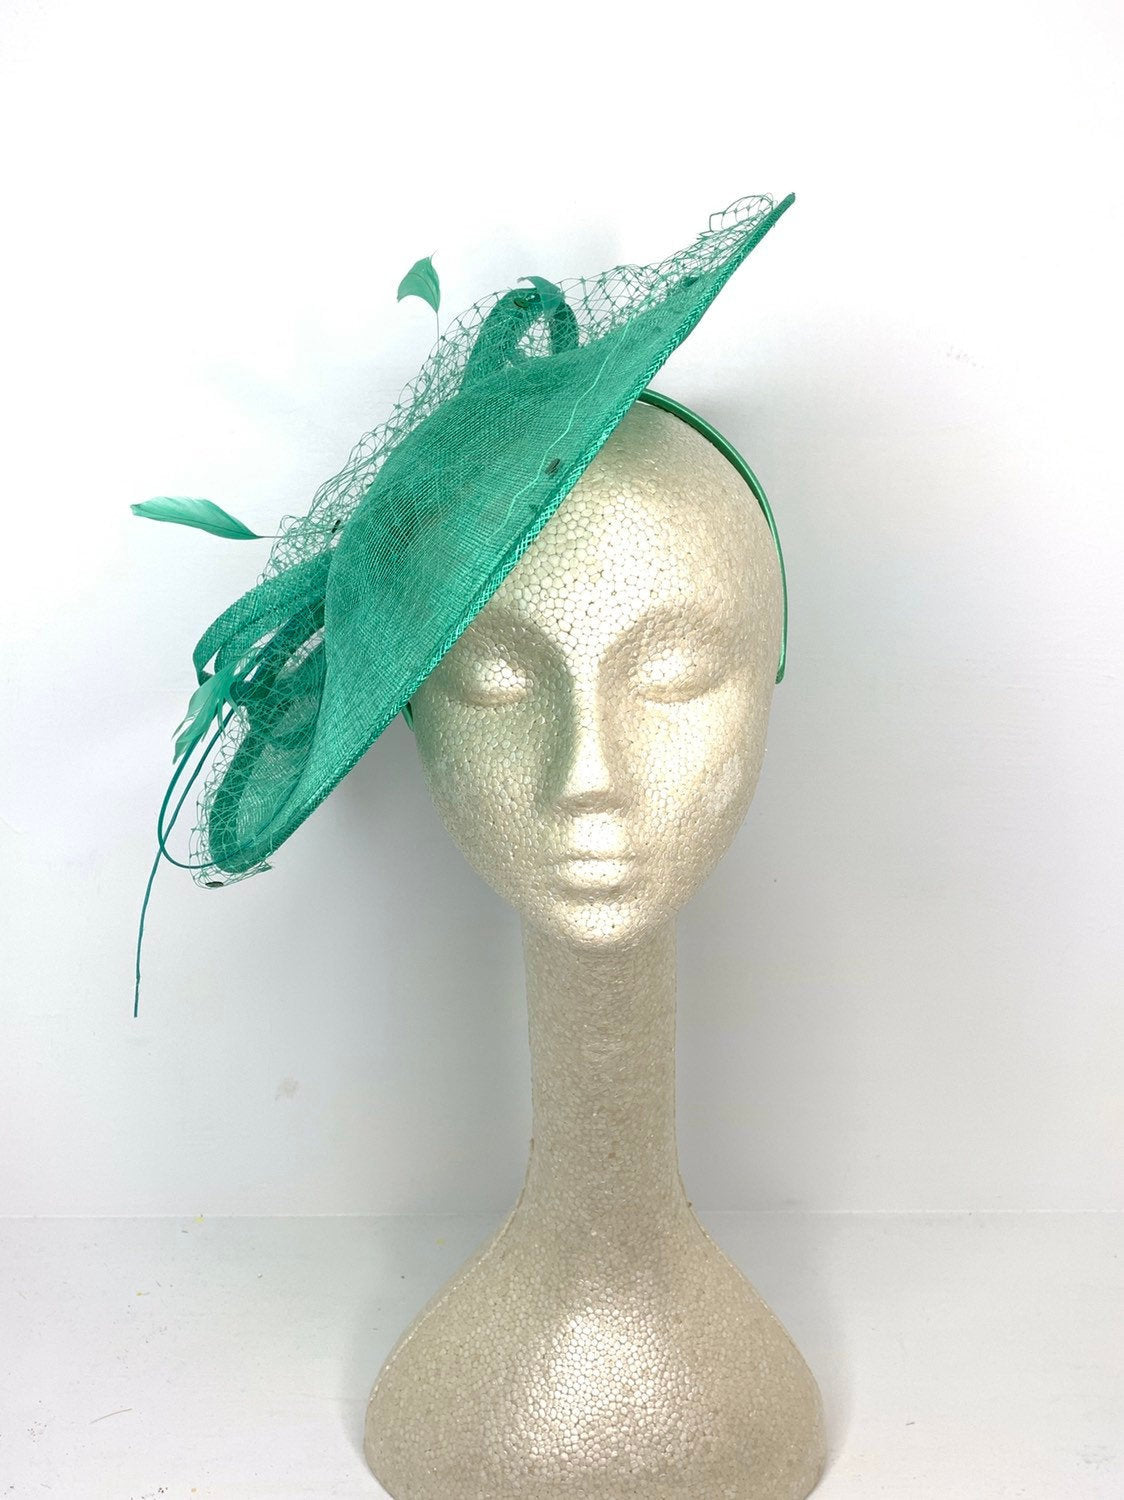 Jade Green Fascinator Hatinator Derby Hat, Womens Tea Party Hat, Church Hat, Derby Hat, Fancy Hat, Royal Hat, Tea Party Hat, weddin